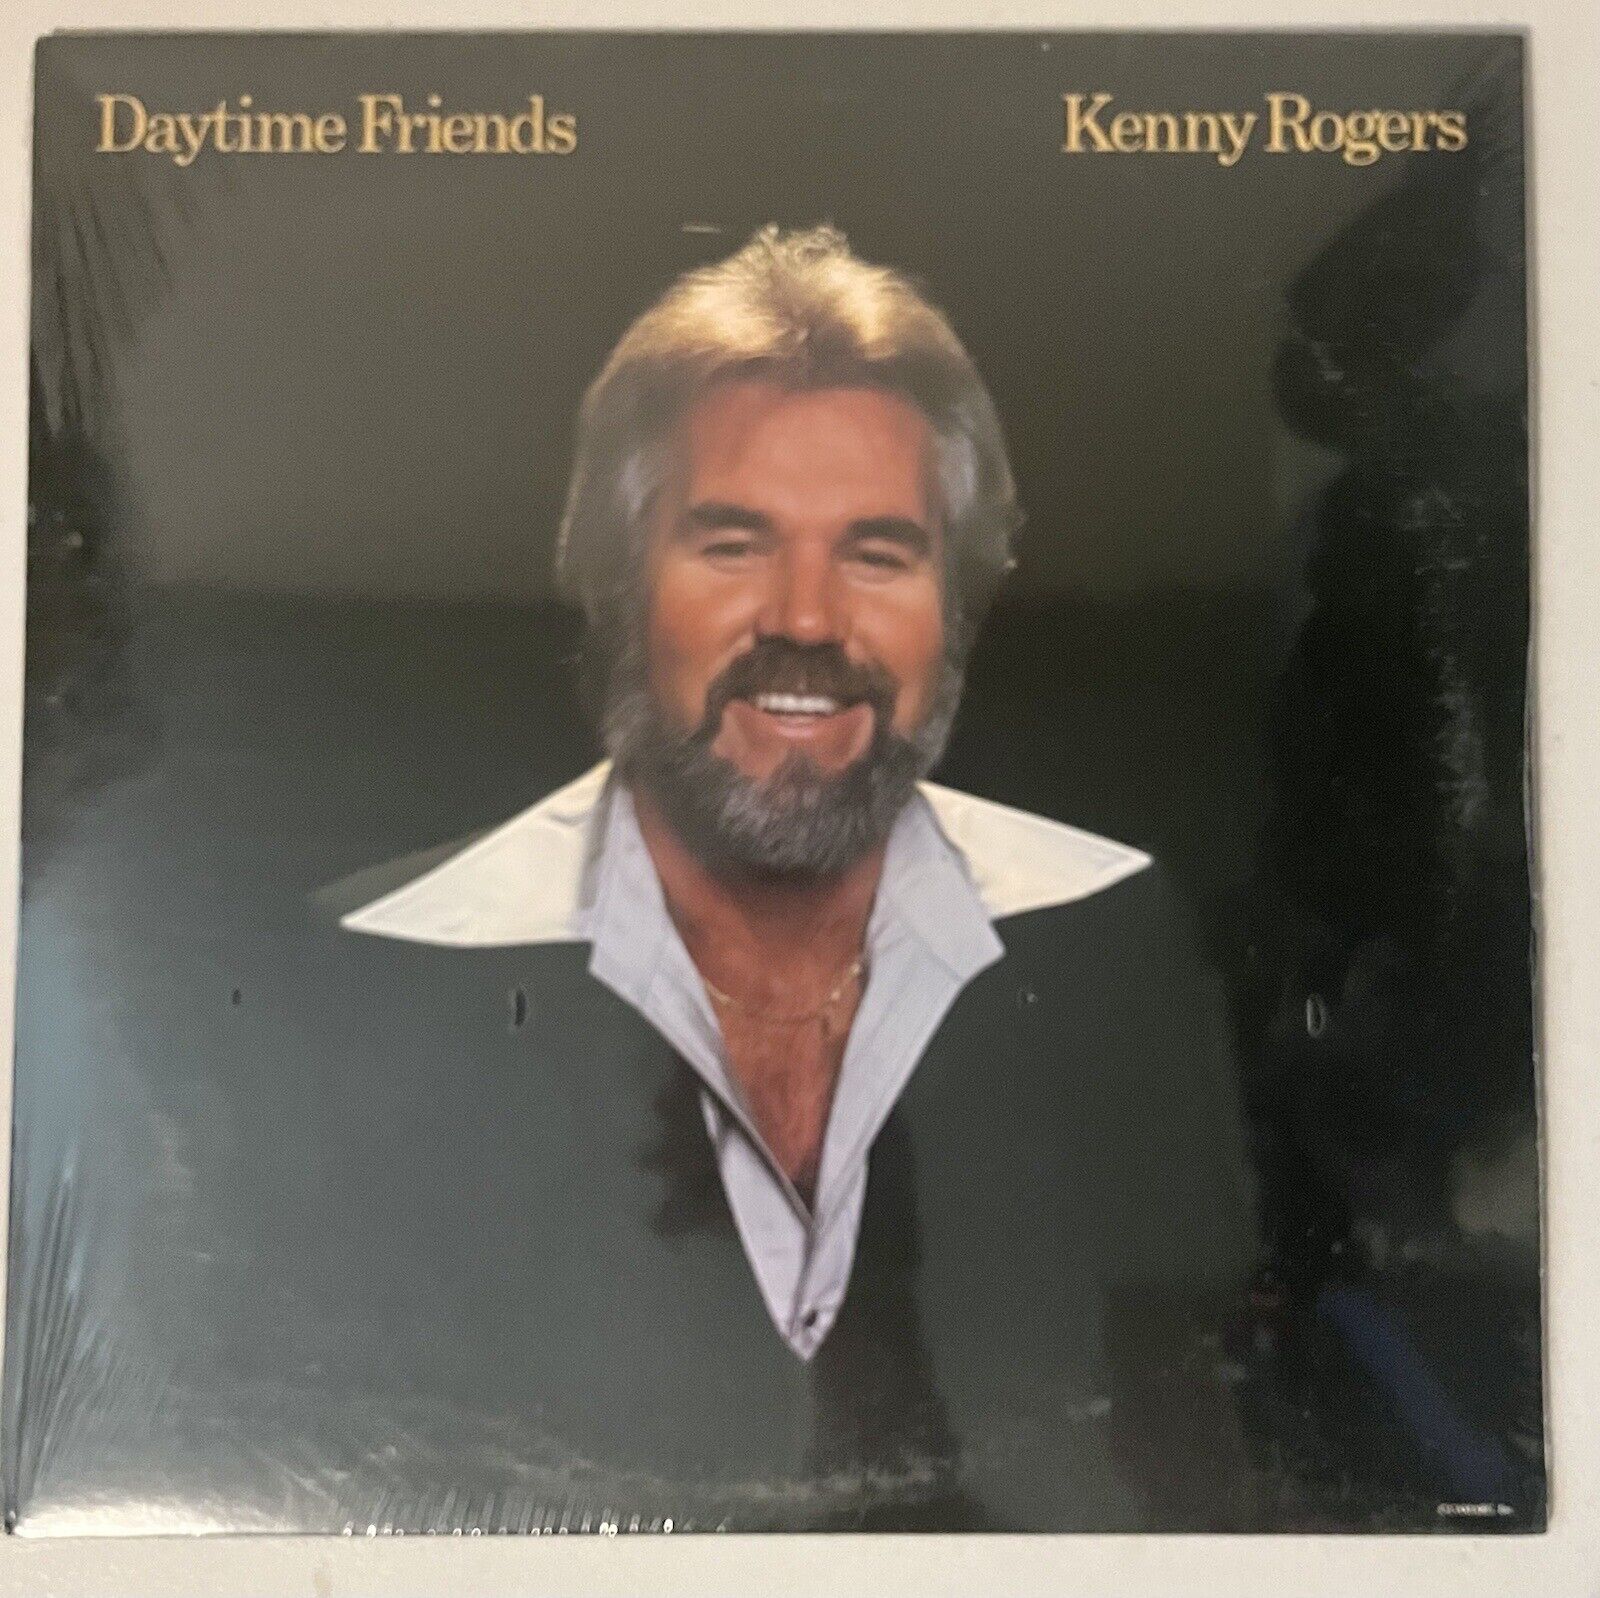 Kenny Rogers Daytime Friends Vinyl Record Sealed in Original Packaging 1977 LP